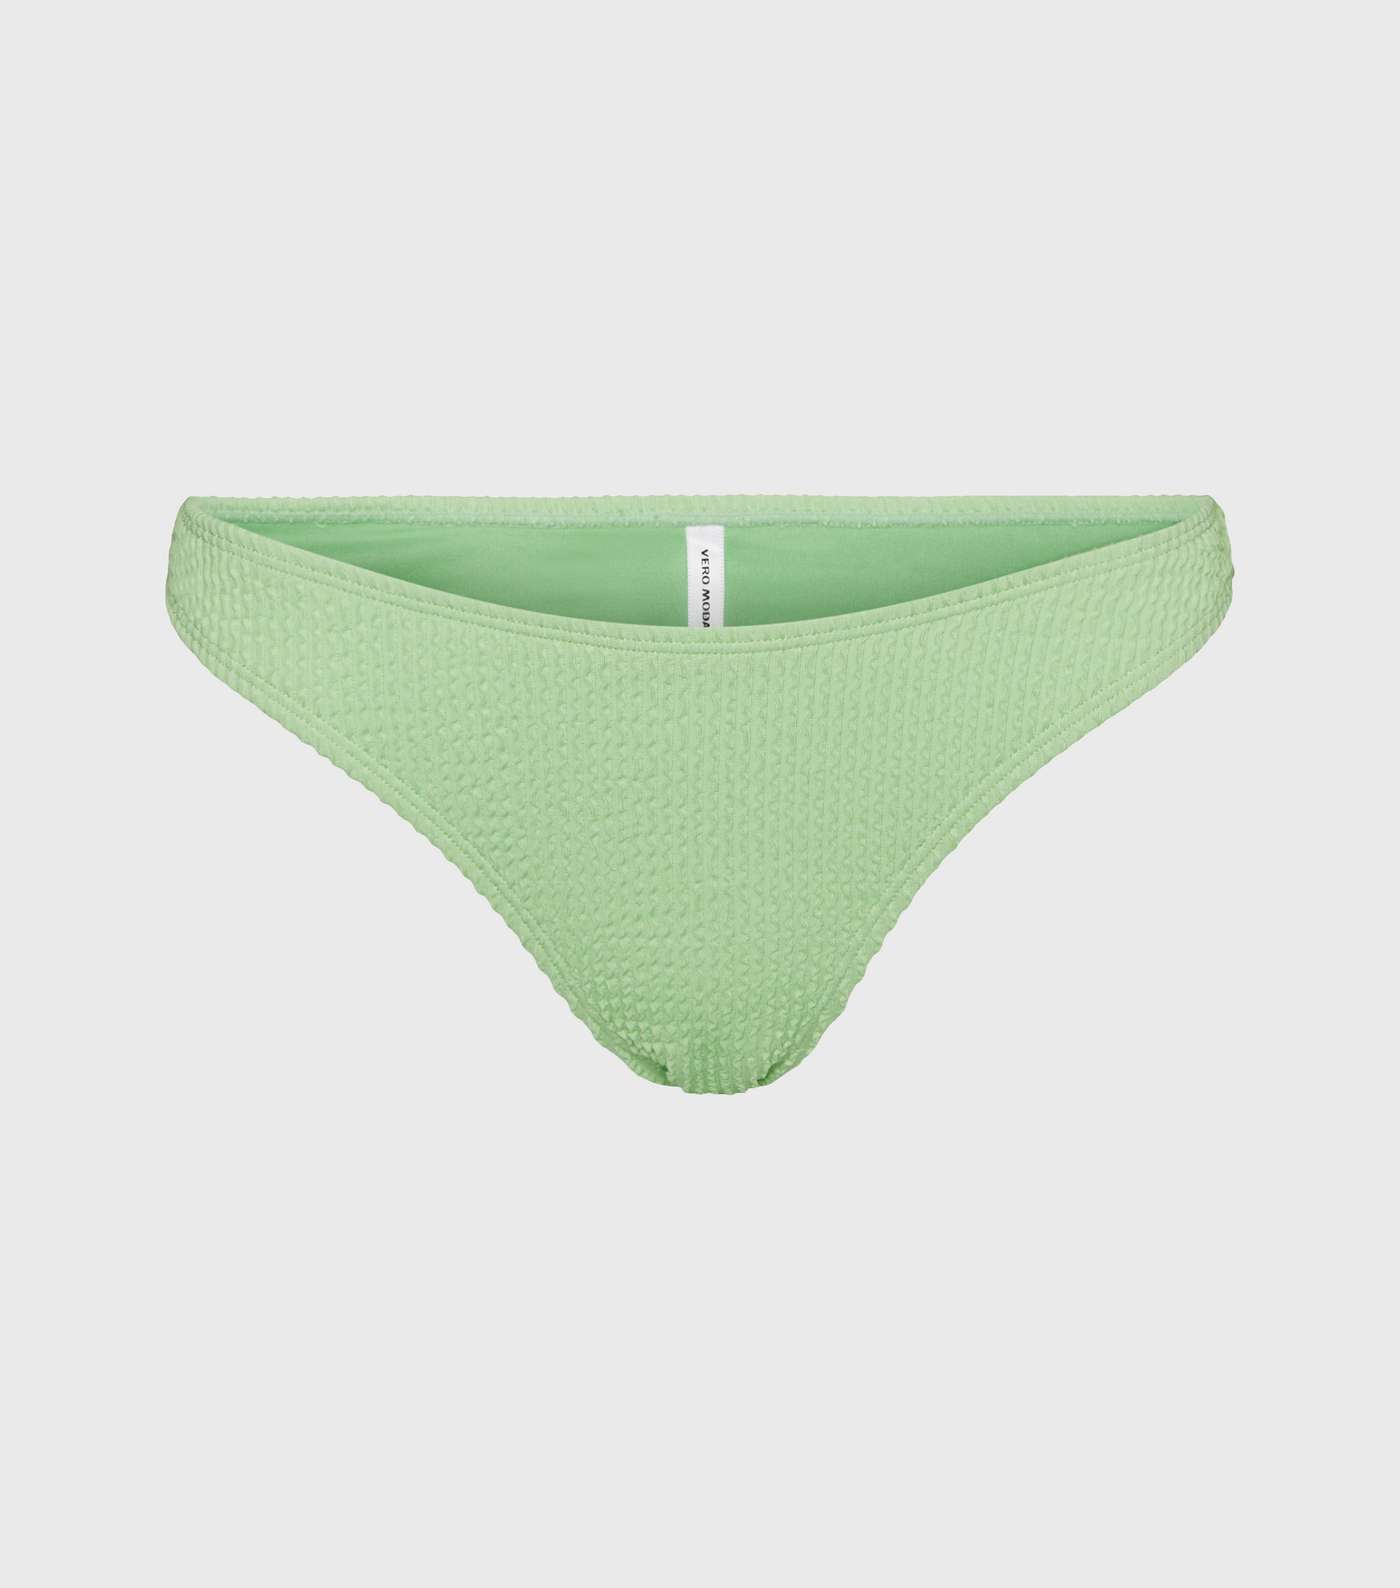 Vero Moda Light Green Textured Bikini Bottoms